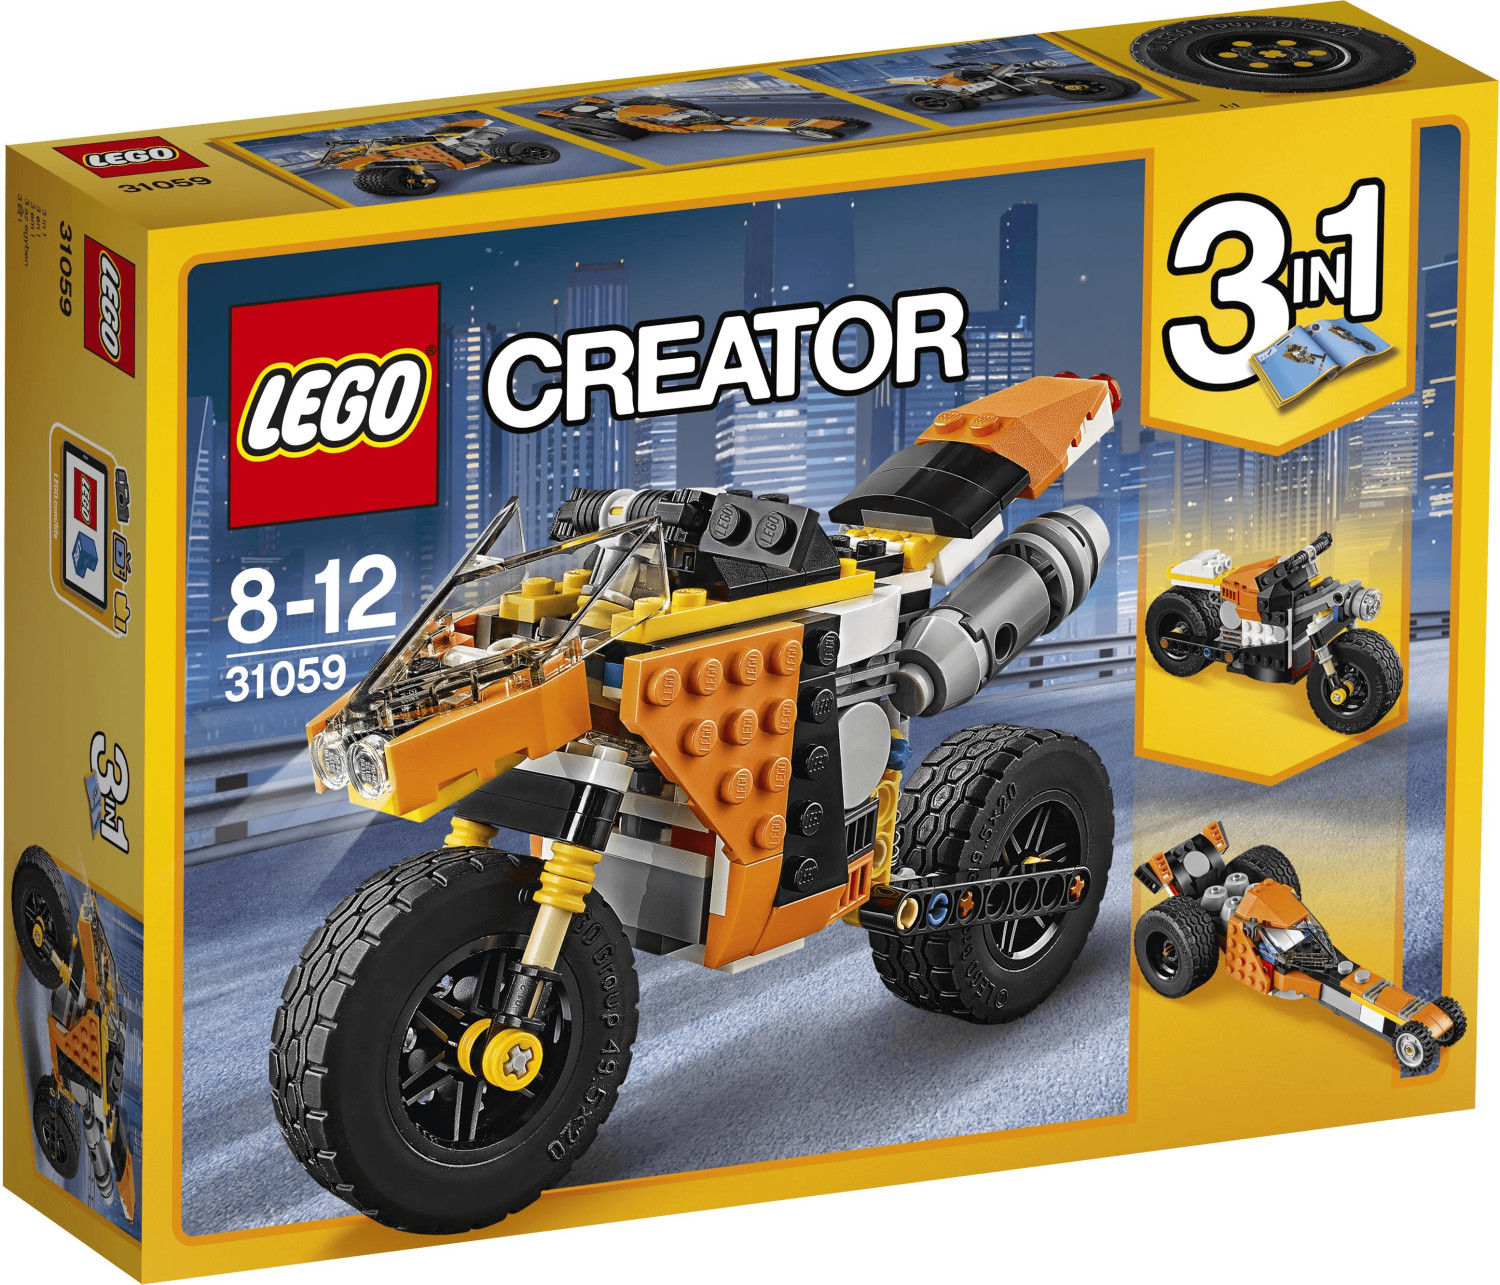 LEGO Creator - 3 in 1 Sunset Street Bike (31059)